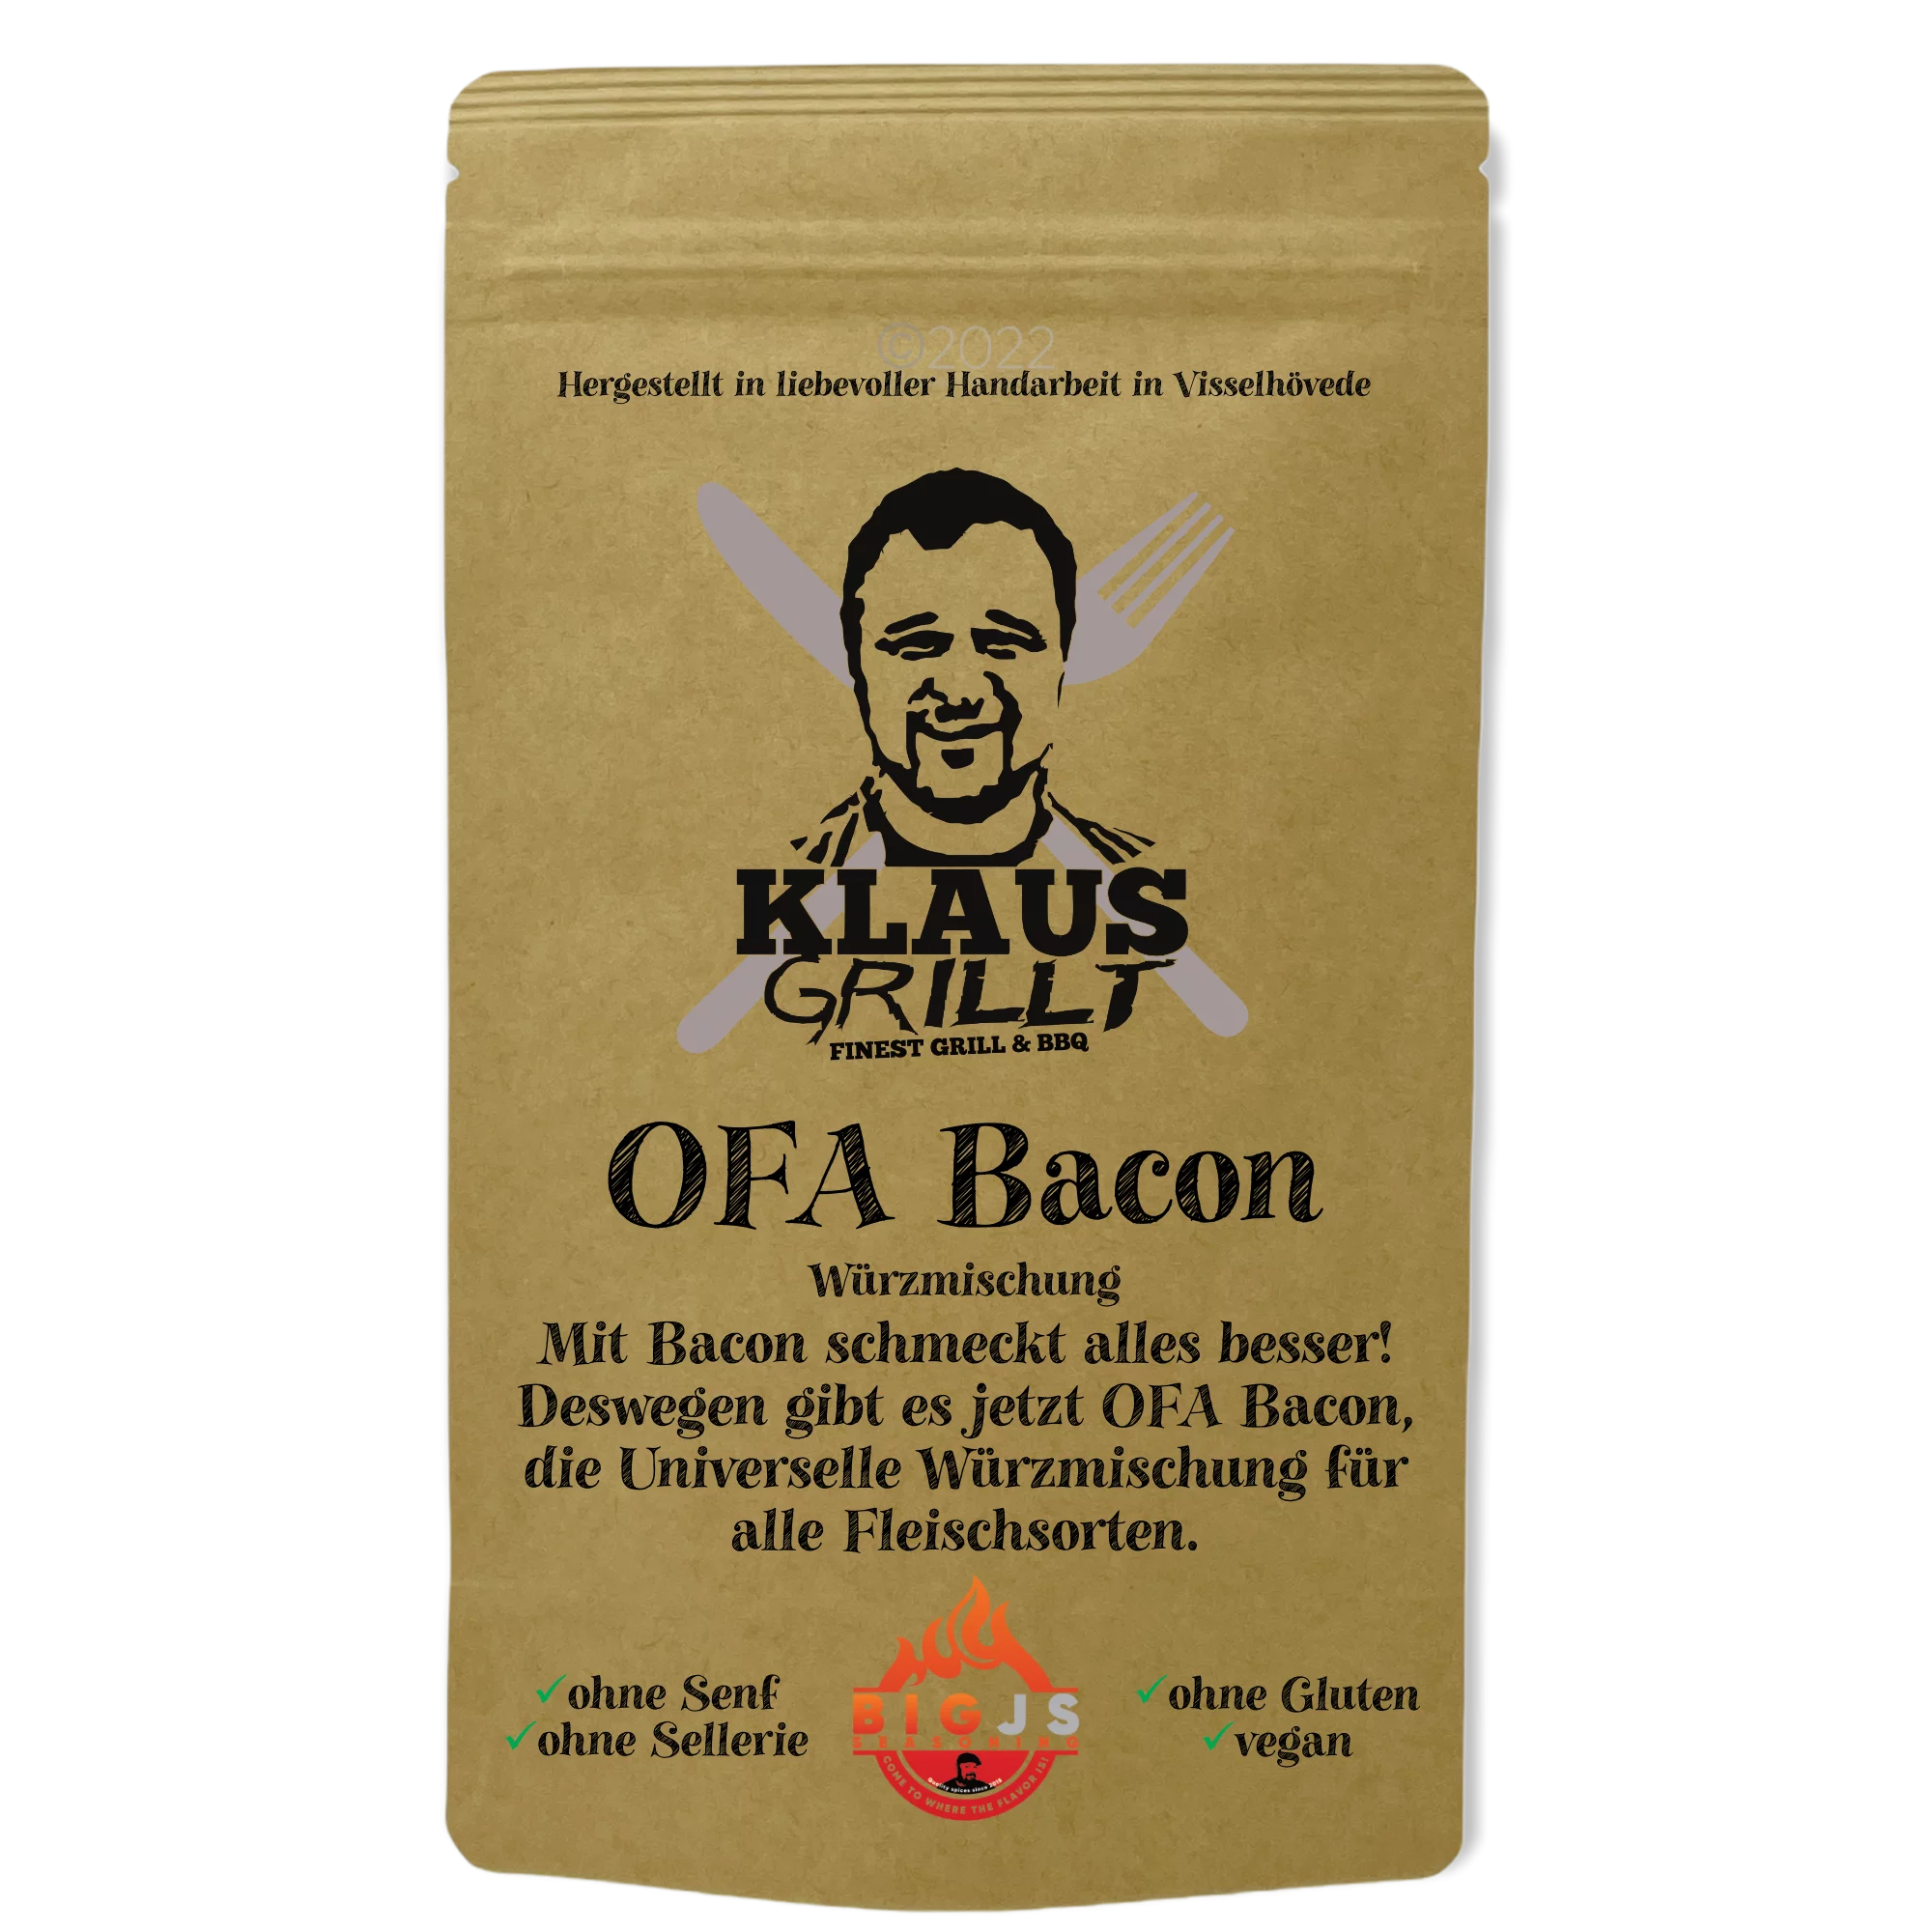 Klaus grillt, OFA Bacon, 250g Standbeutel